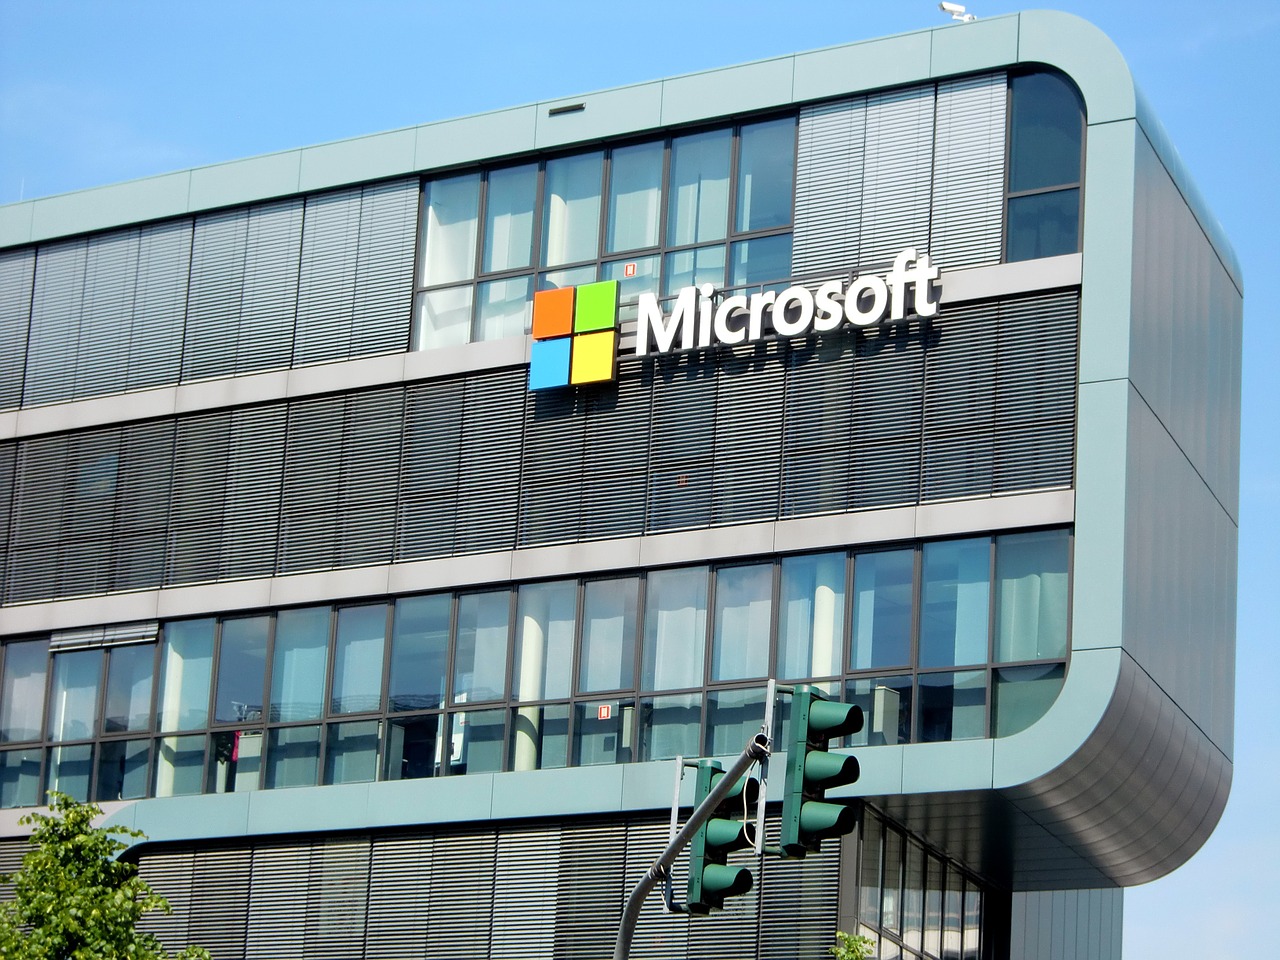 3 000 suppressions de postes chez Microsoft